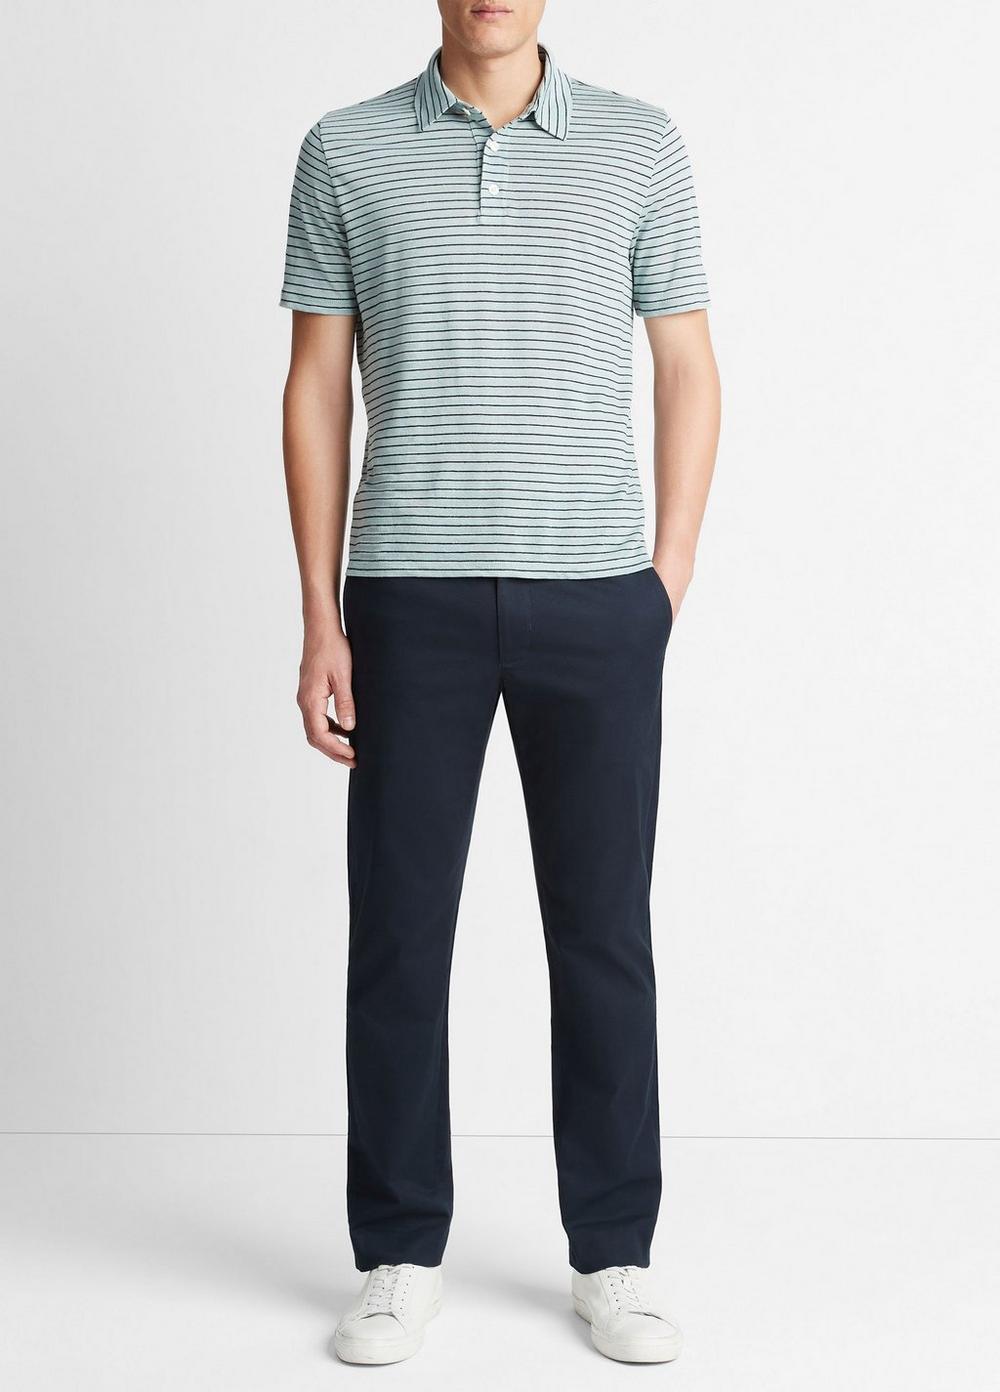 Striped Linen Short-Sleeve Polo Shirt, Ceramic Blue/coastal Blue, Size L Vince